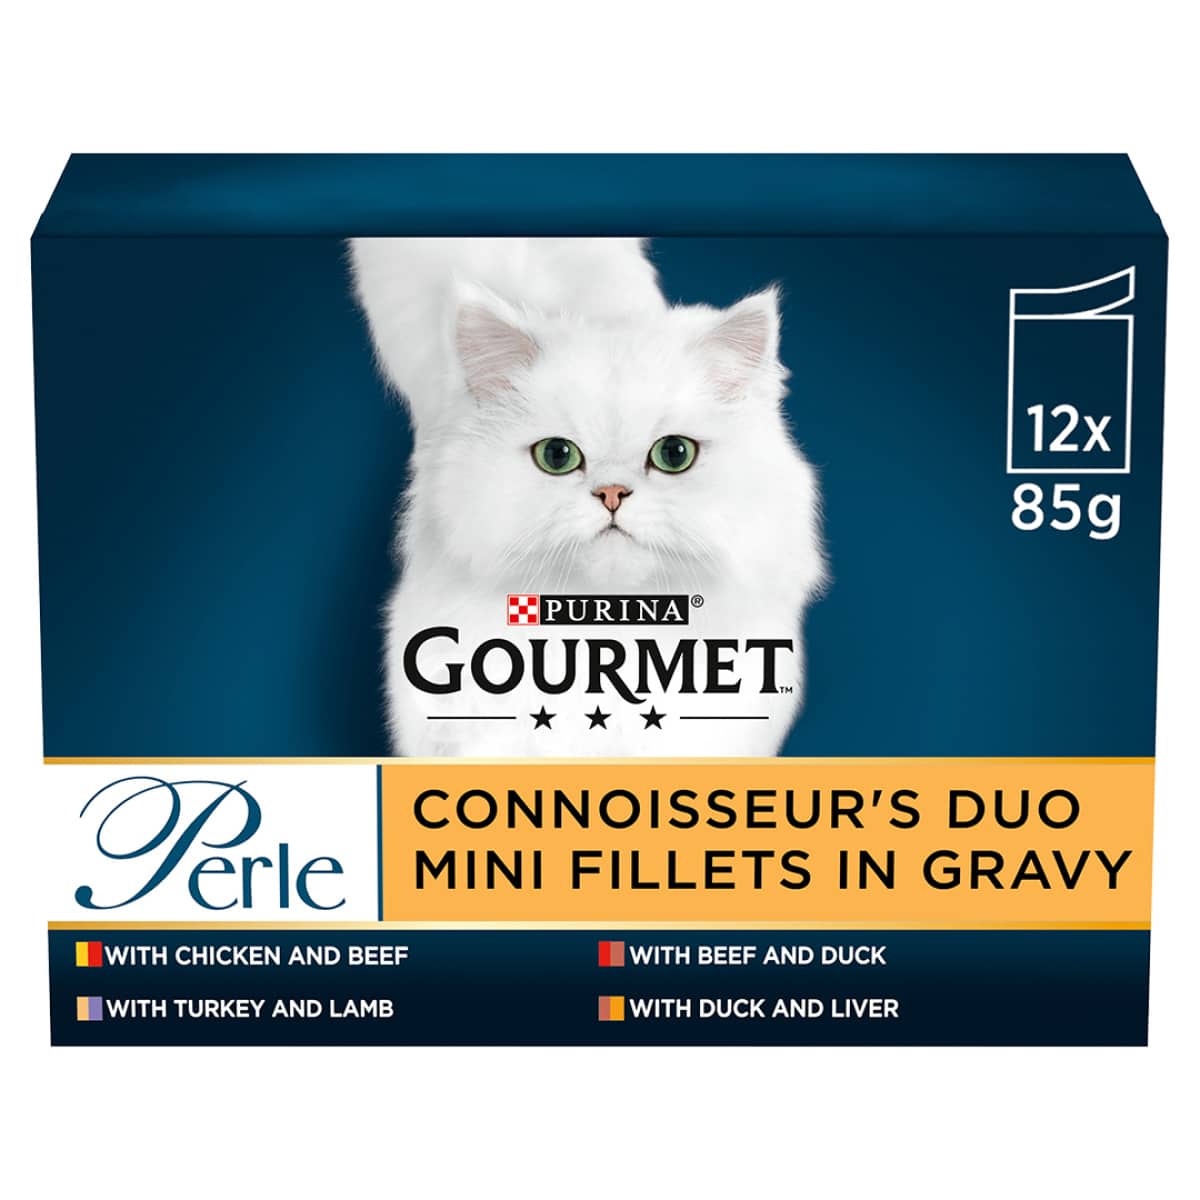 Gourmet Perle Connoisseurs Duo 12 x 85g Main Image